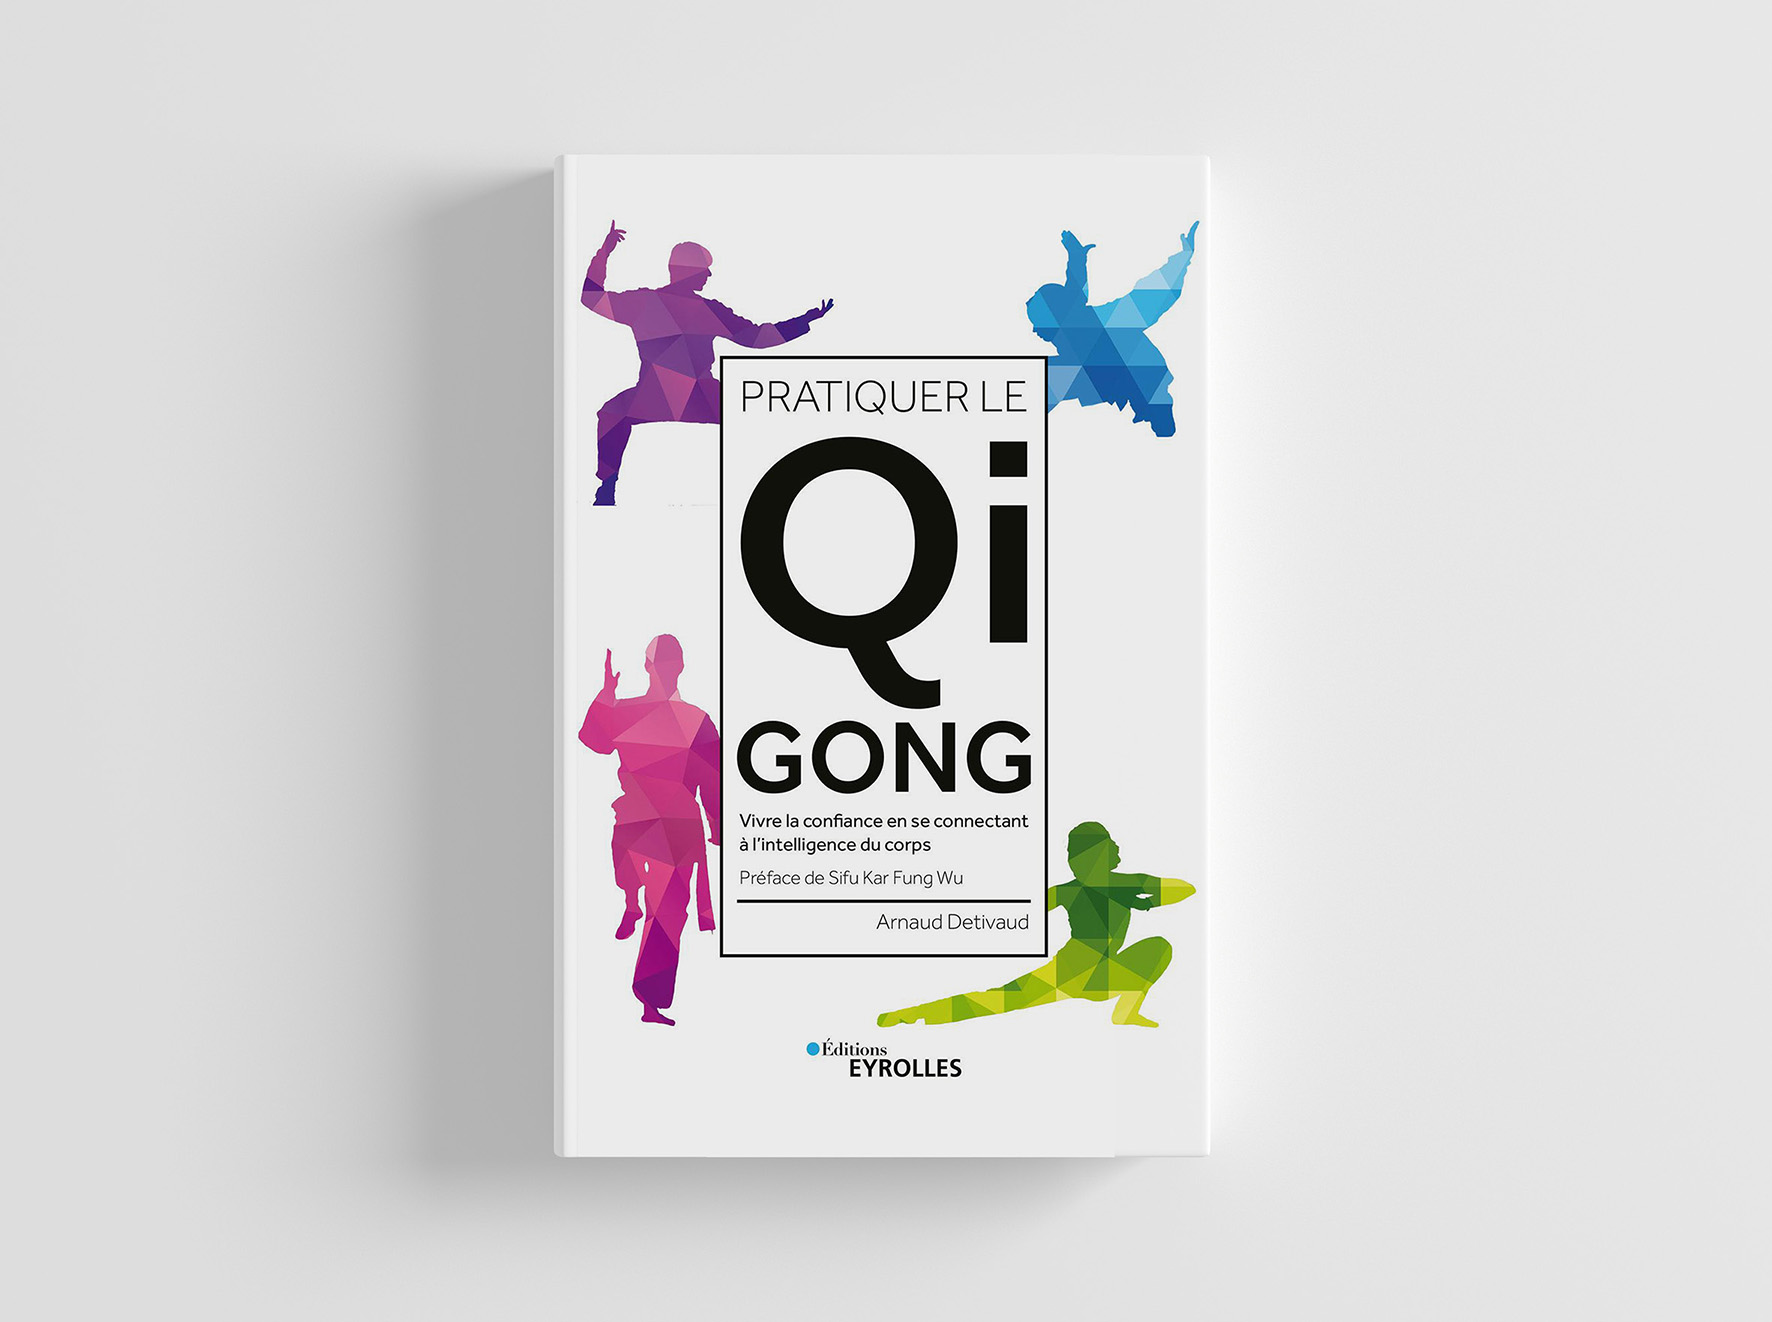 Pratiquer le Qigong